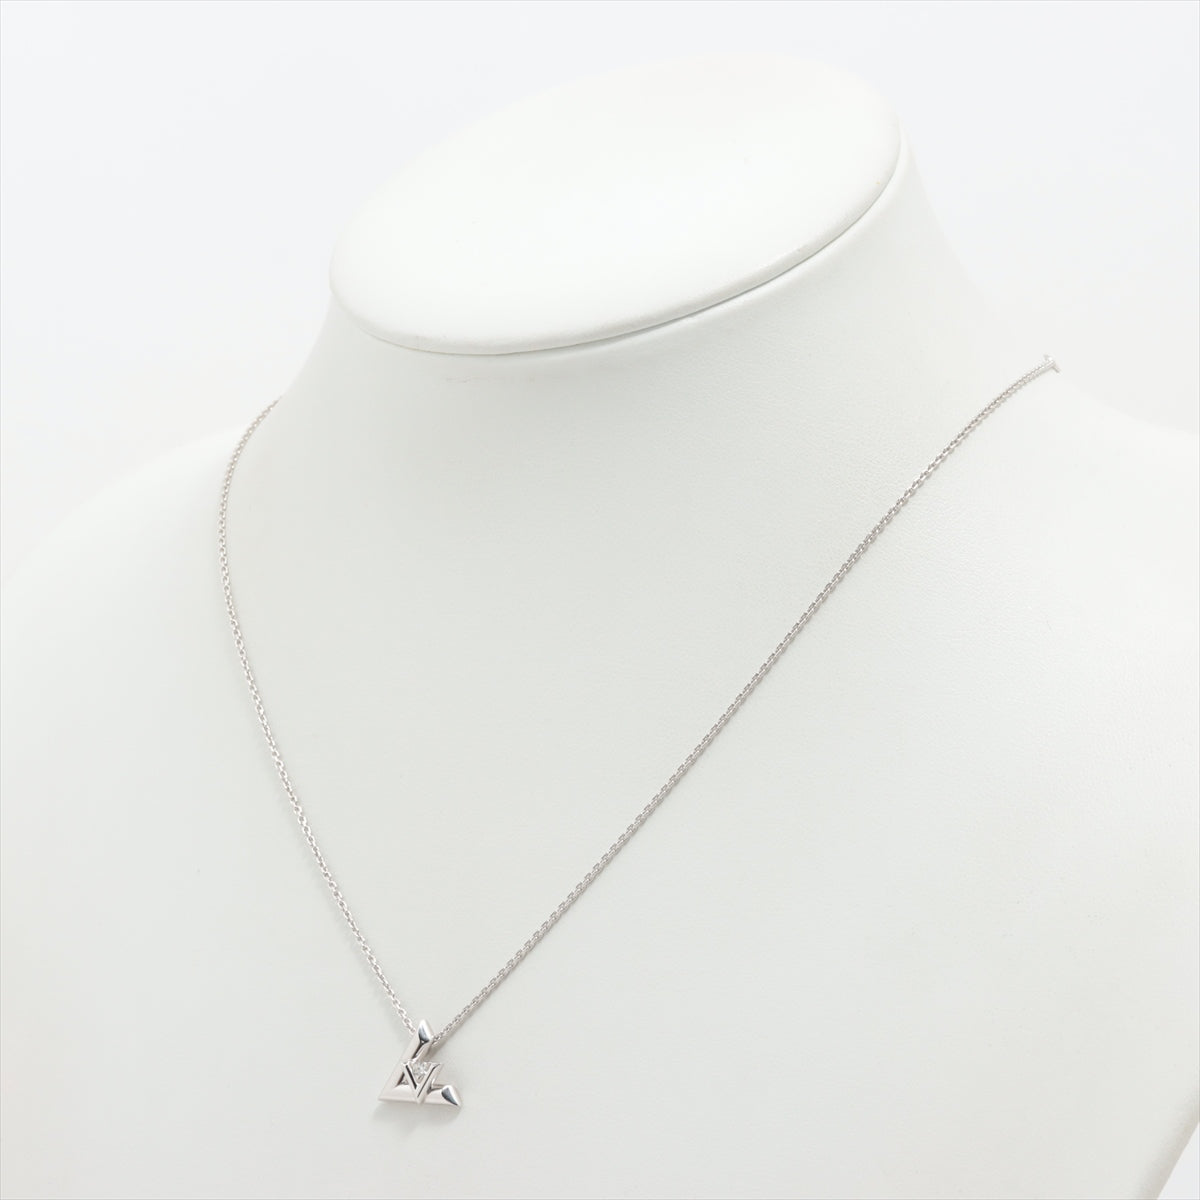 Louis Vuitton Pandantif LV Vault Wang PM diamond Necklace 750(WG) 6.1g